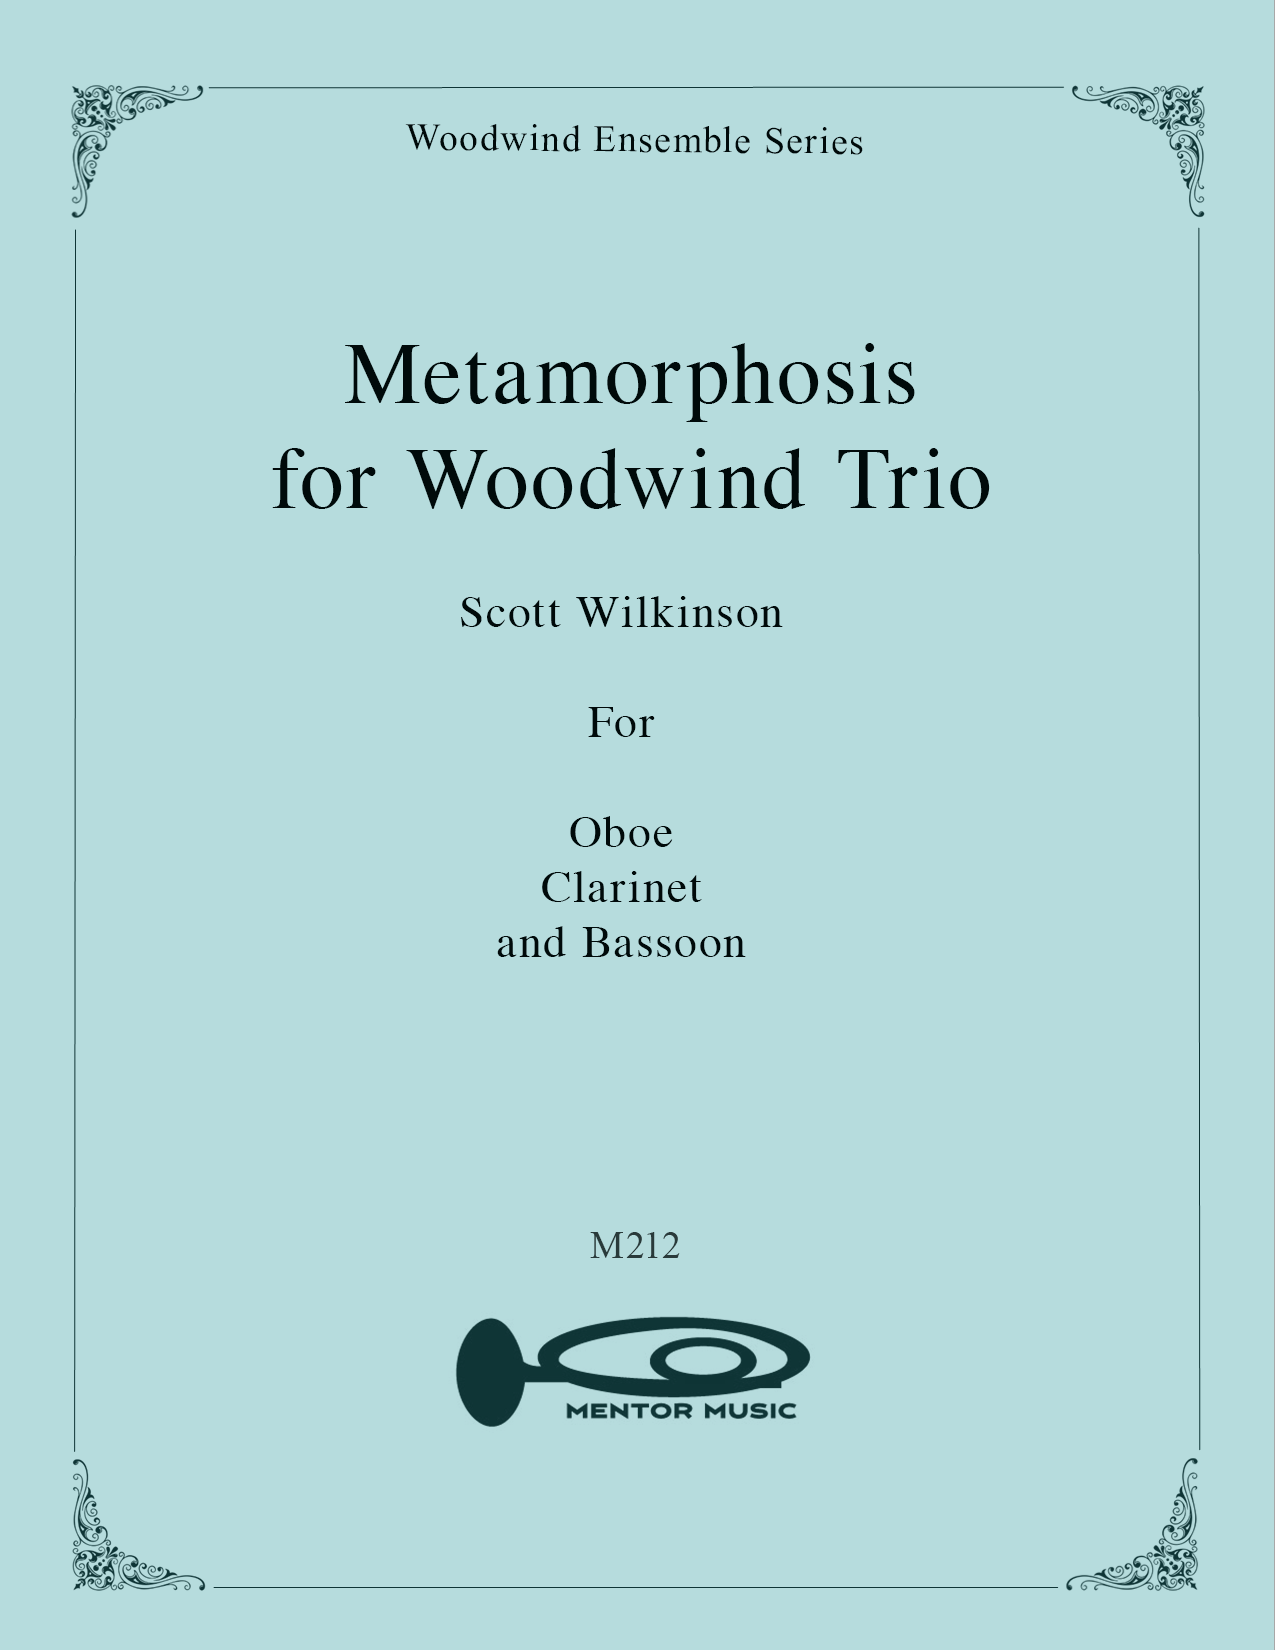 Metamorphosis for Woodwind Trio